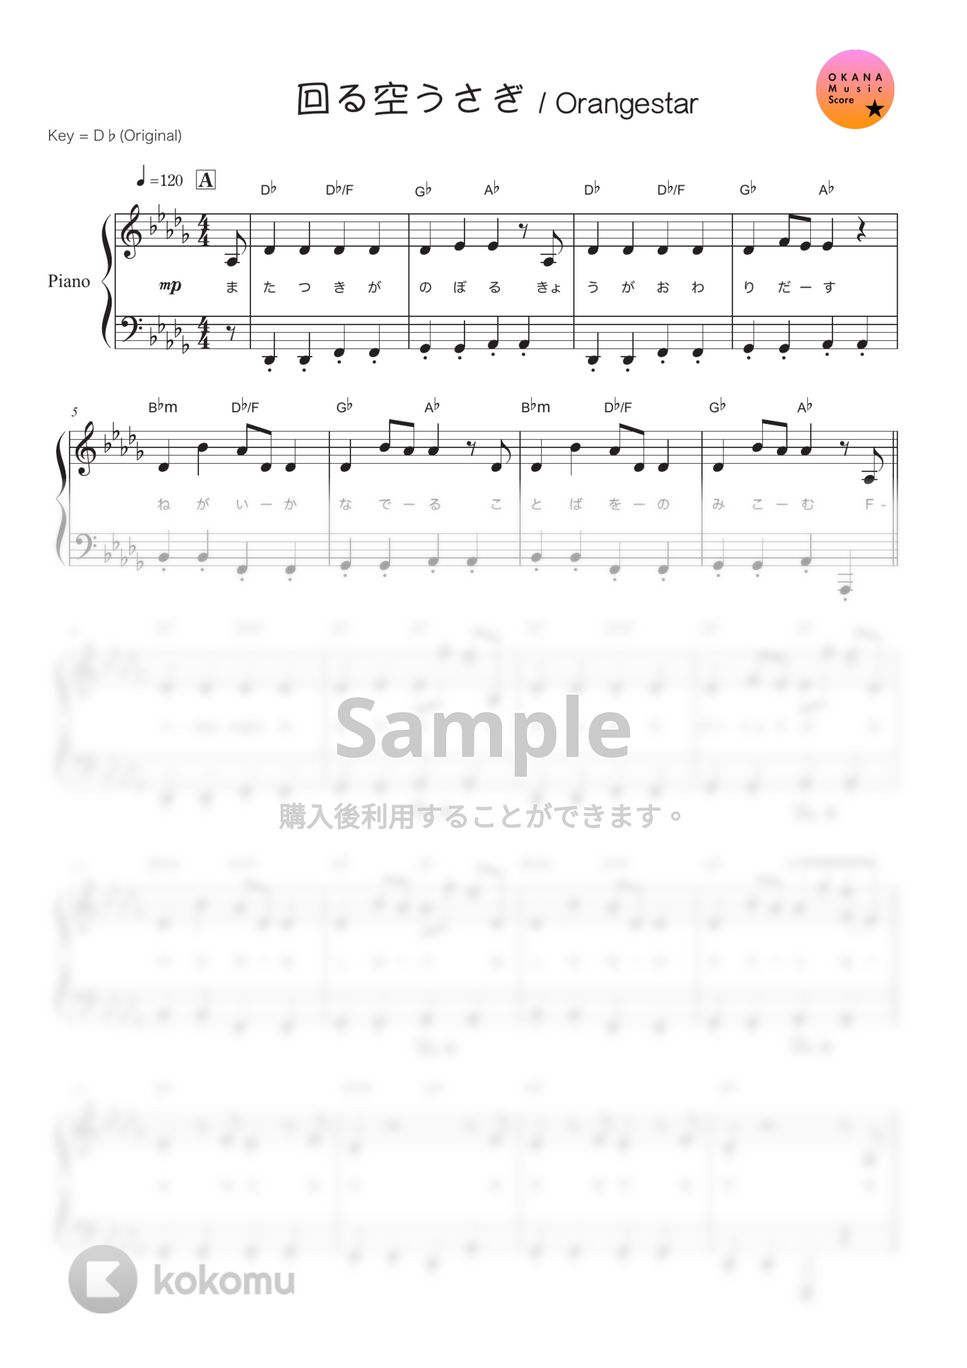 Orangestar - 回る空うさぎ (ピアノ中級) by OKANA